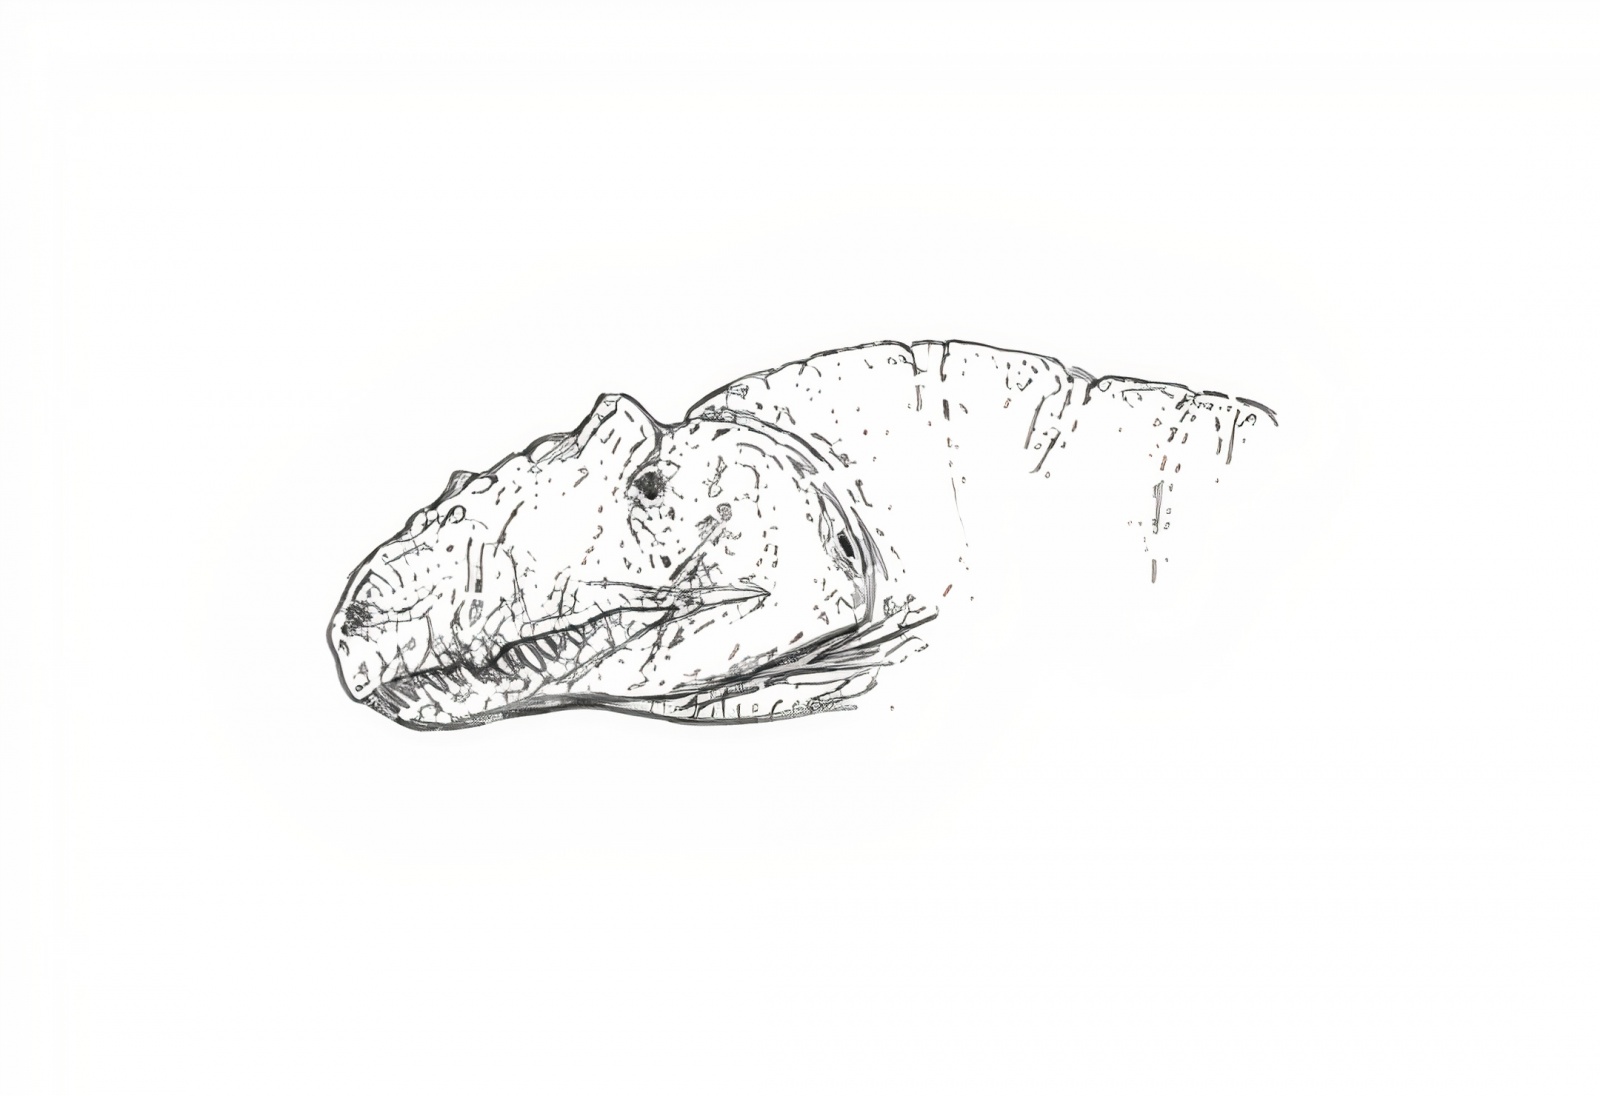 Allosaurus jimmadseni (SMA 0005) "Big Al 2". Художник сообщества Фанерозой, Дмитрий Редискин